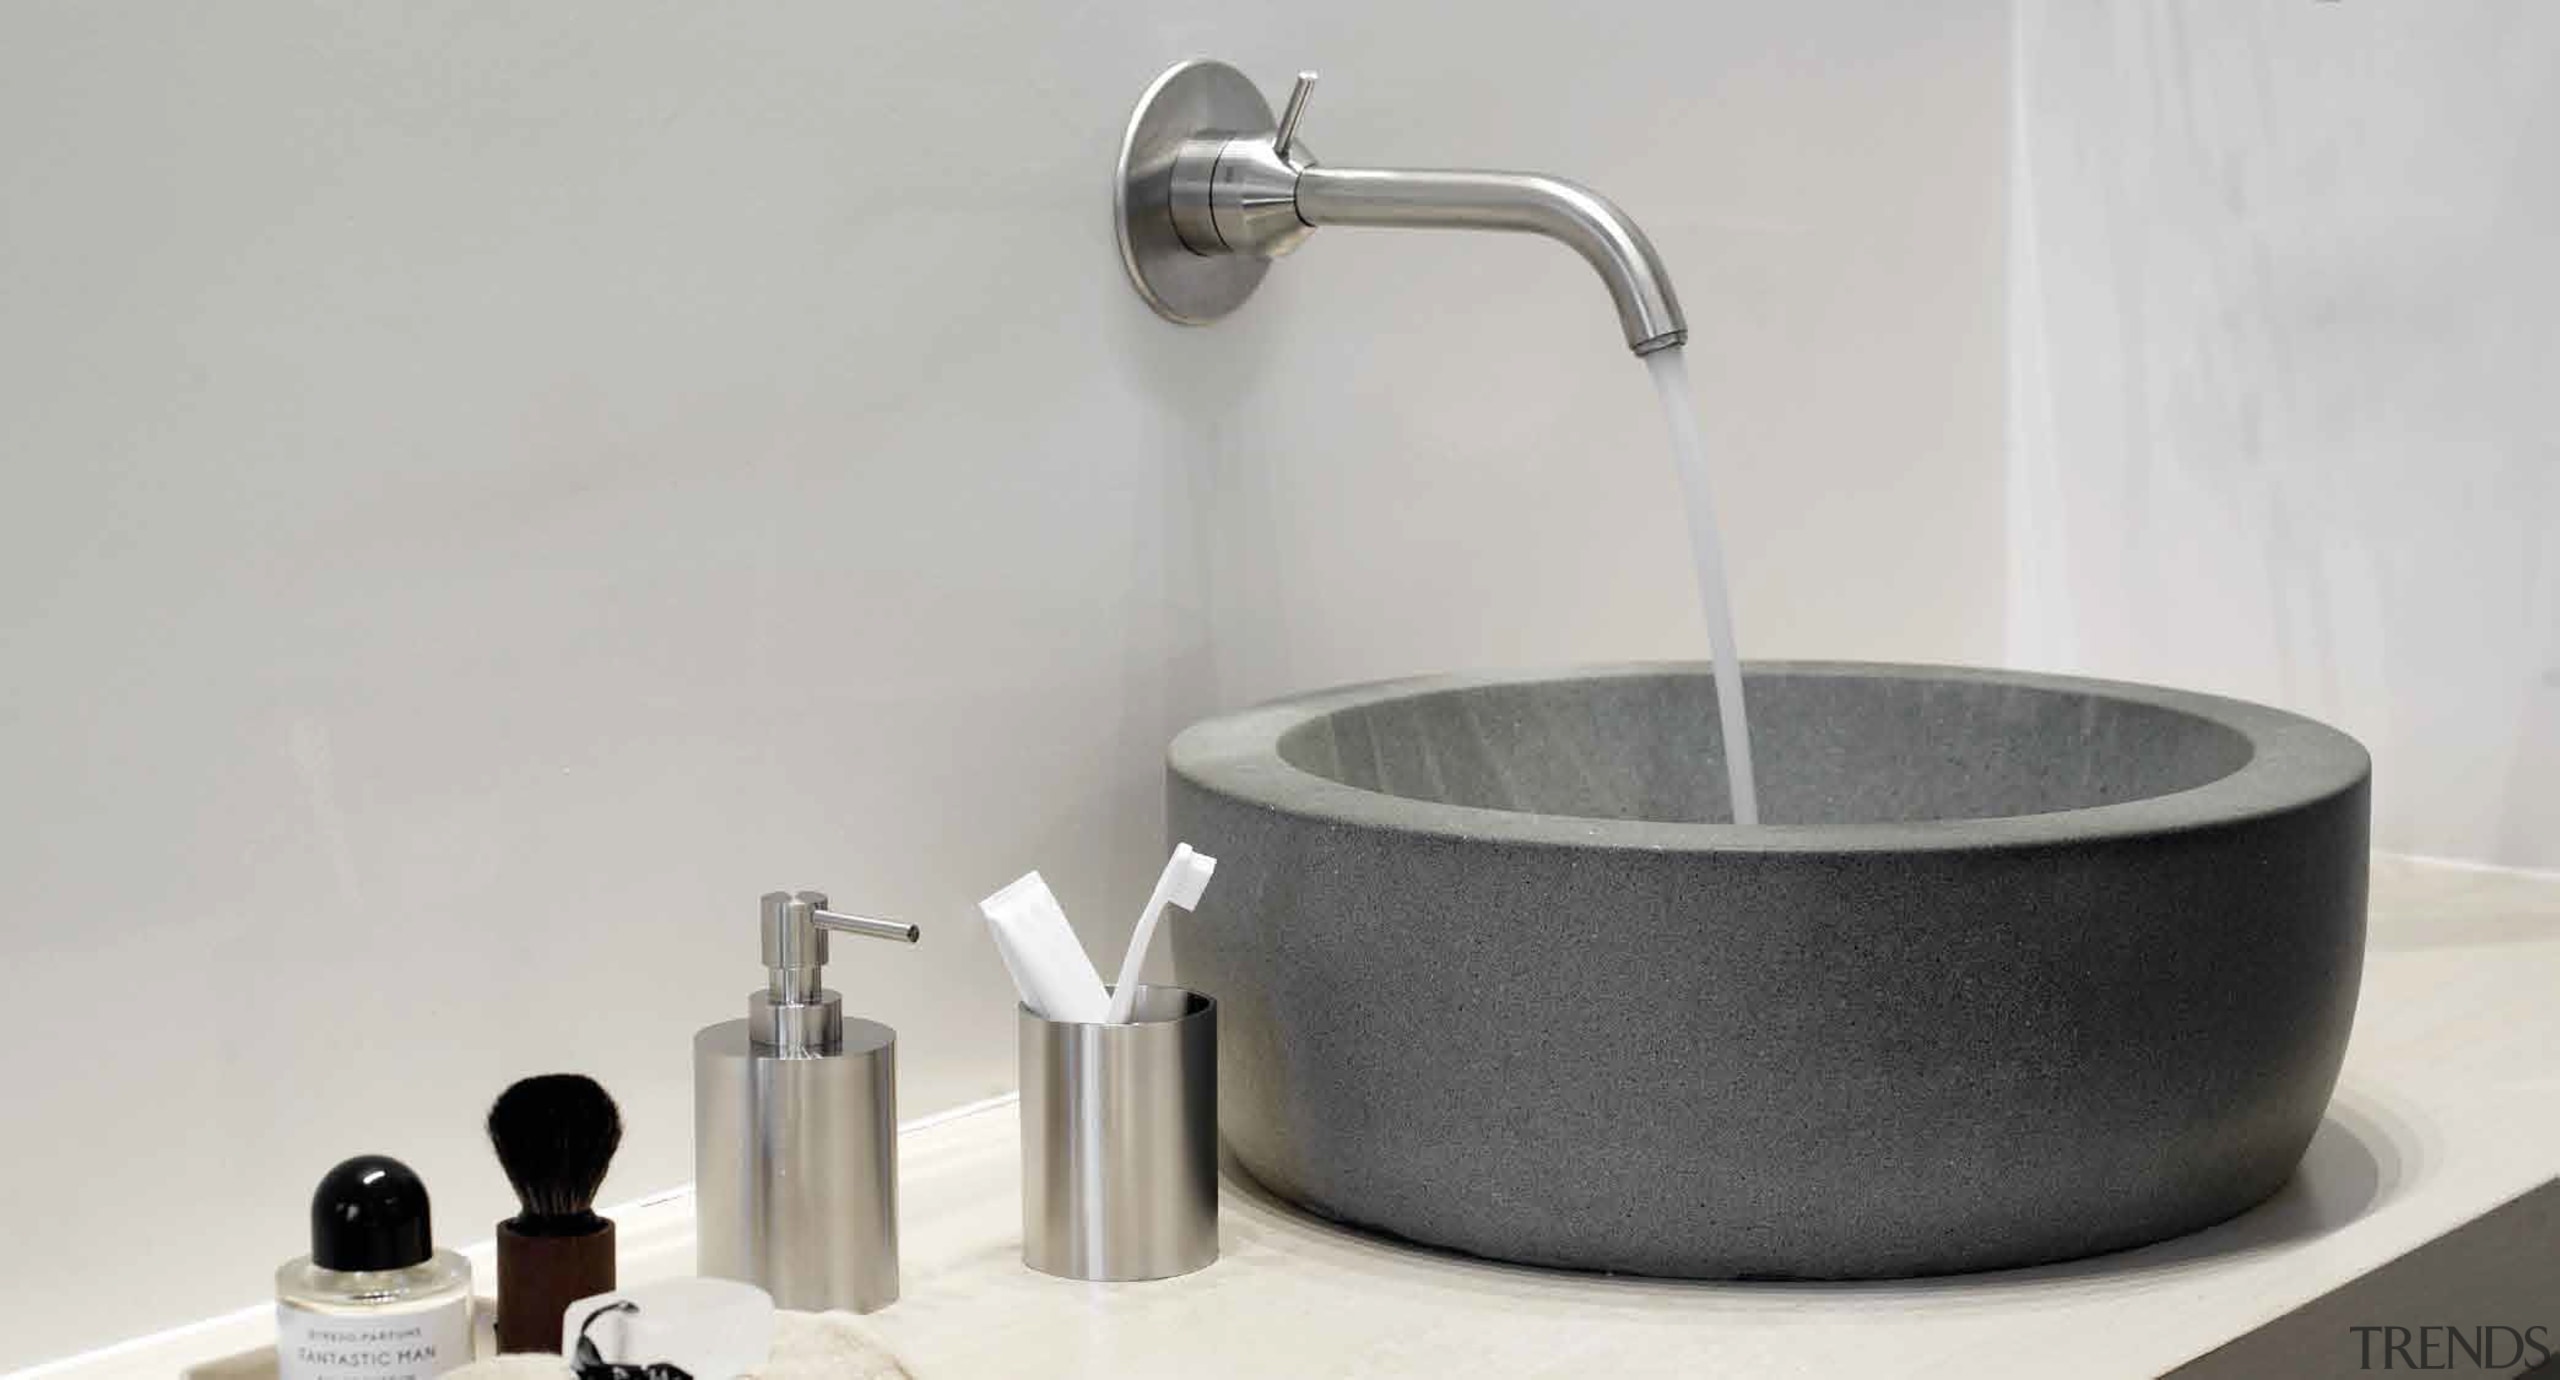 PB500 - Soap Dispenser, Free Standing. PB100 - bathroom sink, plumbing fixture, product design, sink, tap, gray